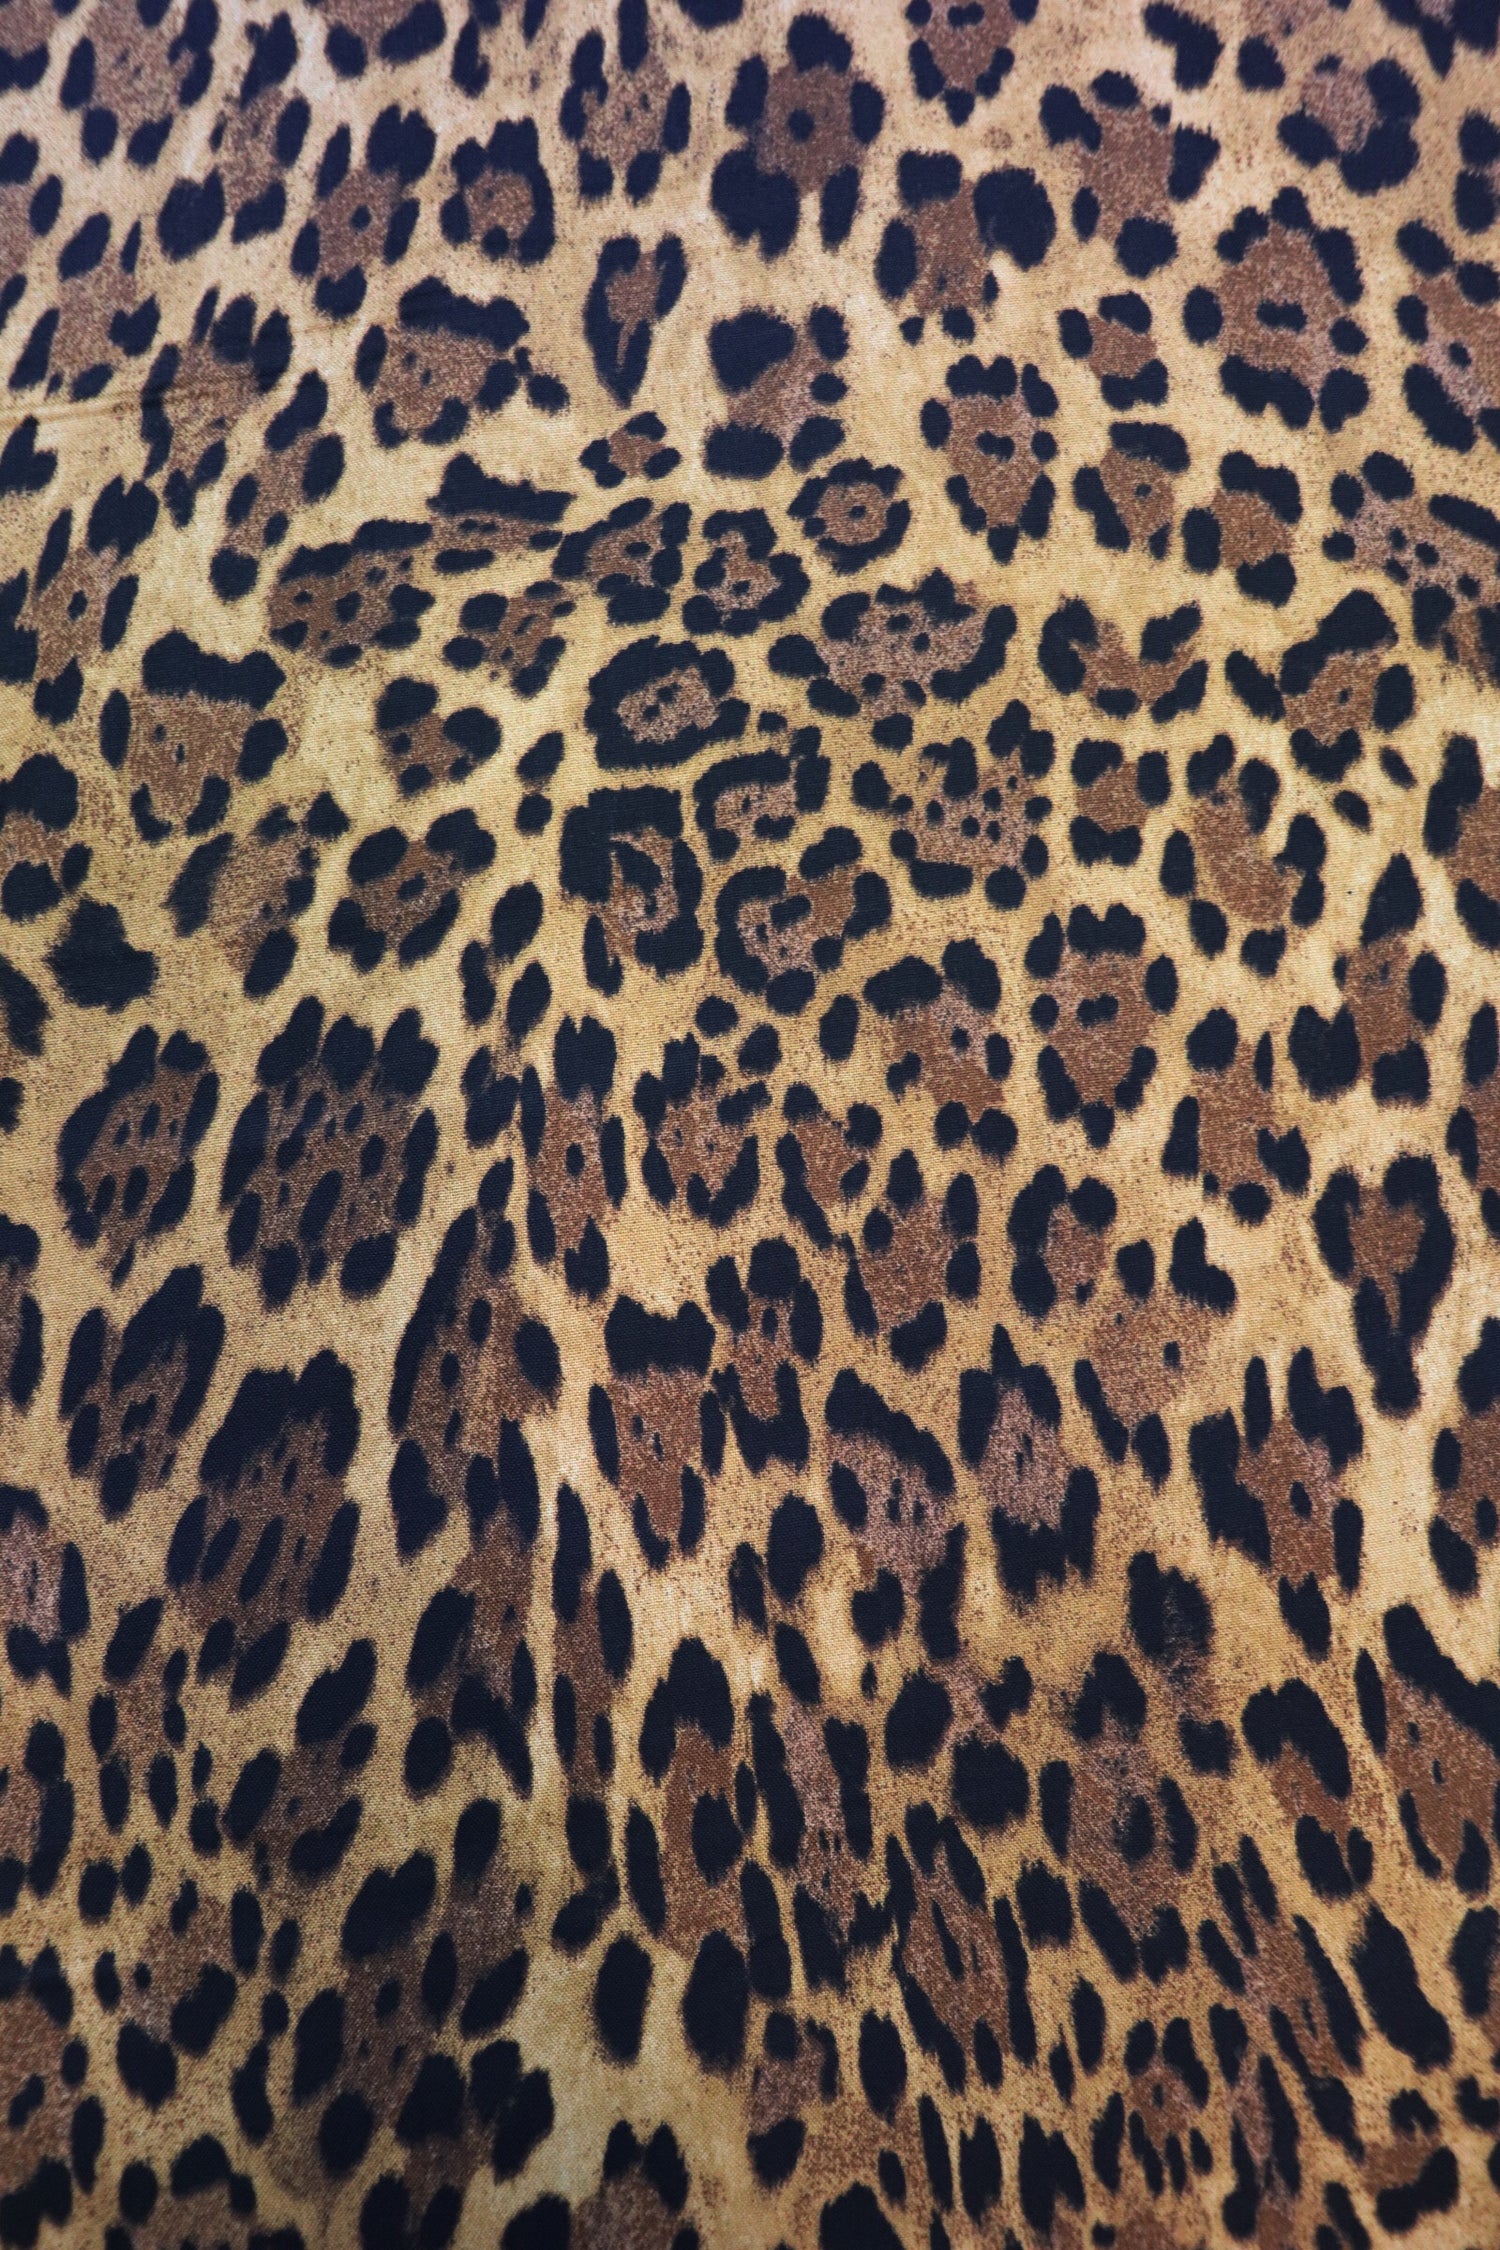 Animal Print- Big Cat Leopard Face Mask